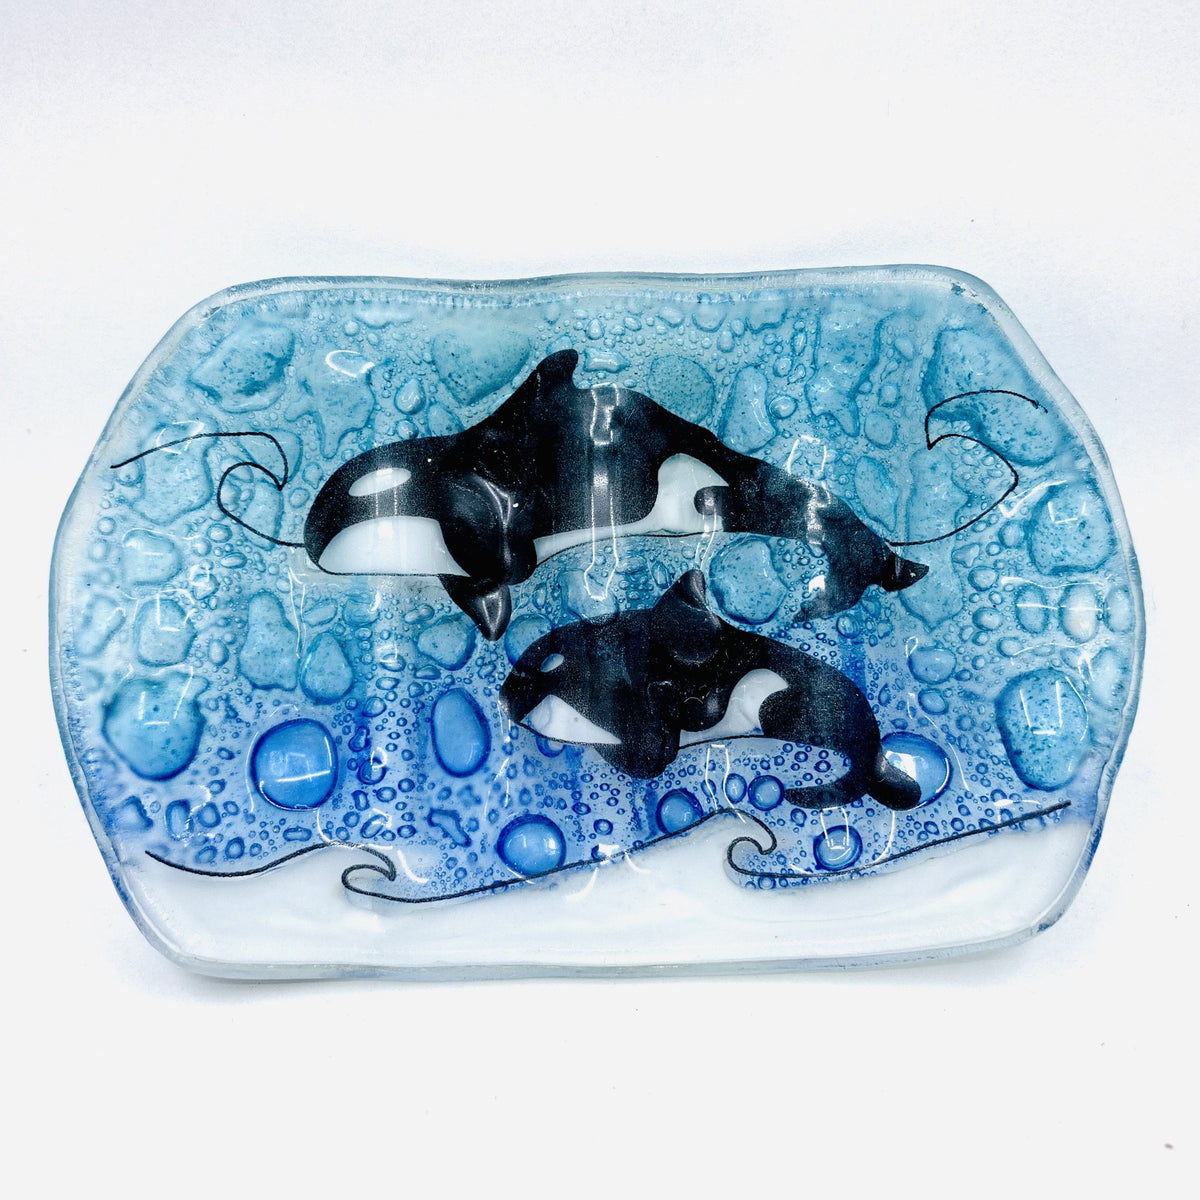 Copy of Fair Trade Soap Dish - SD-32 Orca Whales Dishware Pam Peana 